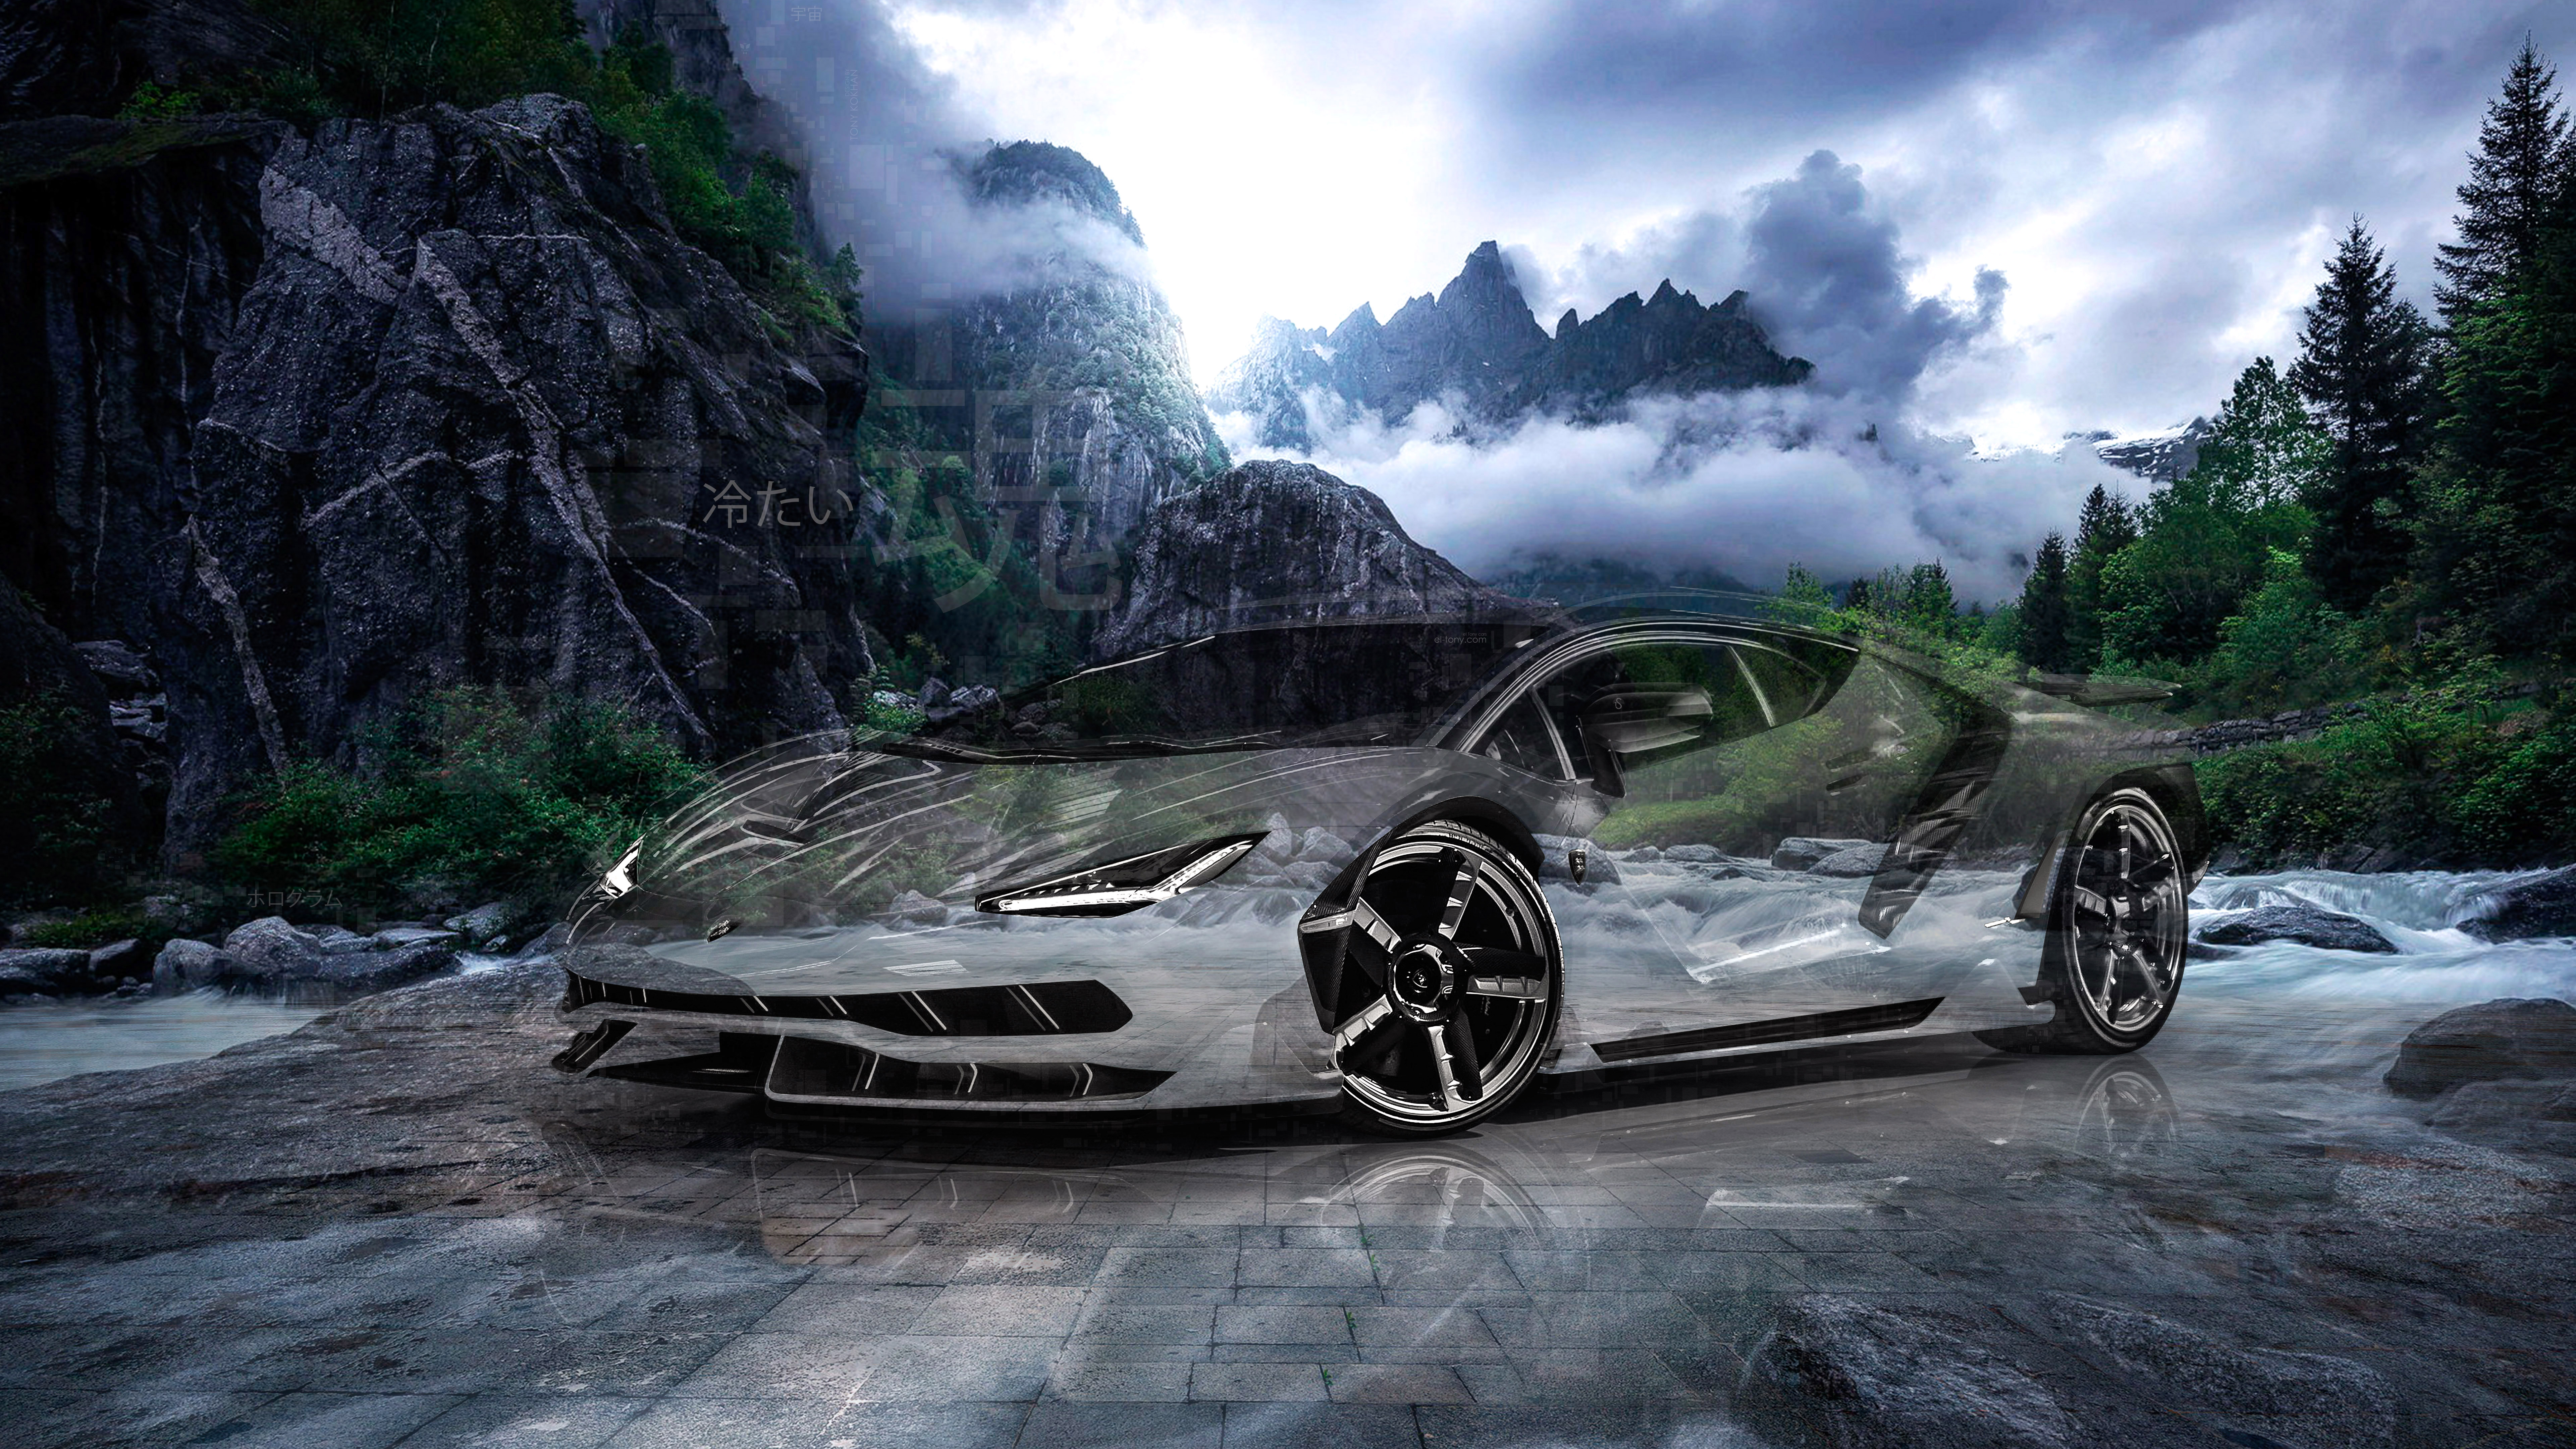 Lamborghini-Centenario-Super-Crystal-Cold-Soul-Universe-Mountains-River-Nature-Universe-Art-Car-2023